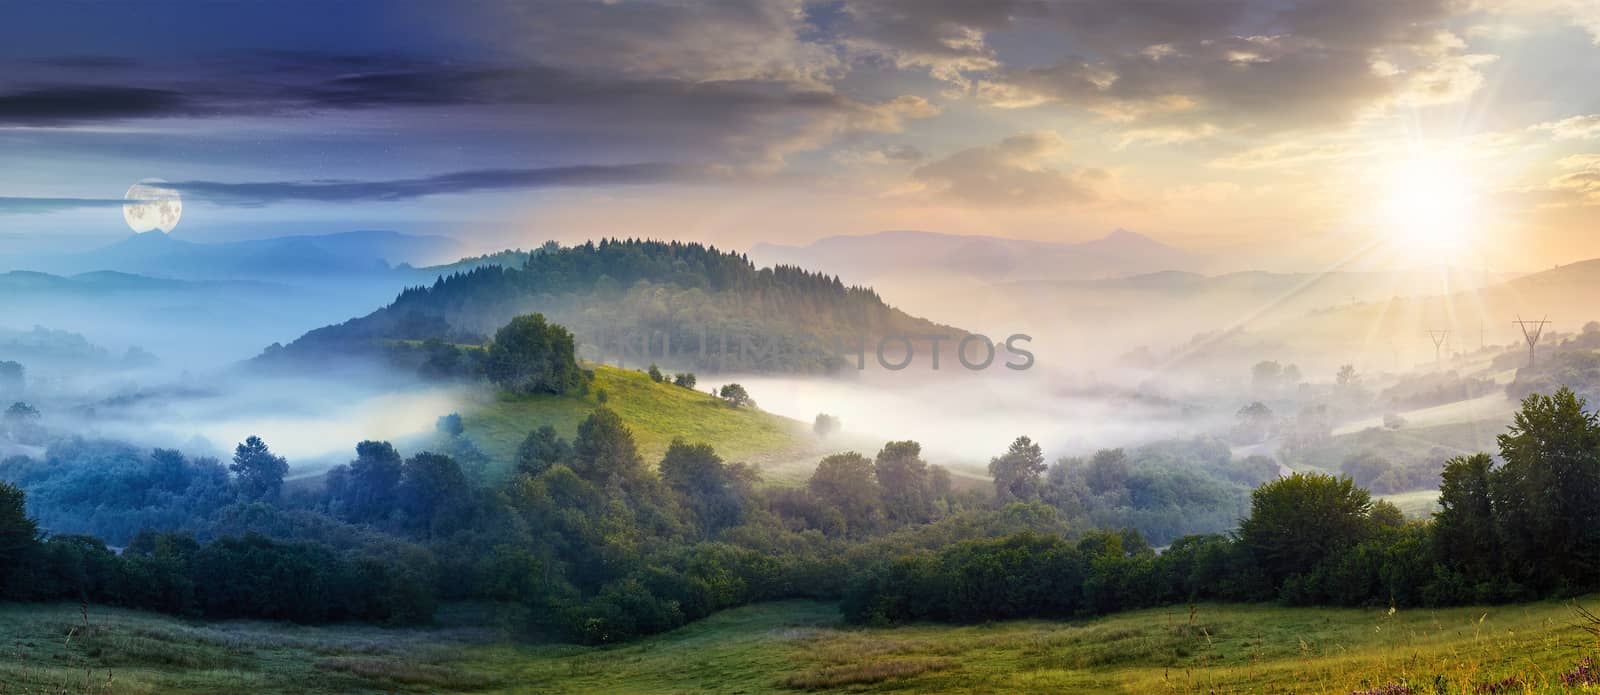 mysterious fog on hillside in rural area by Pellinni